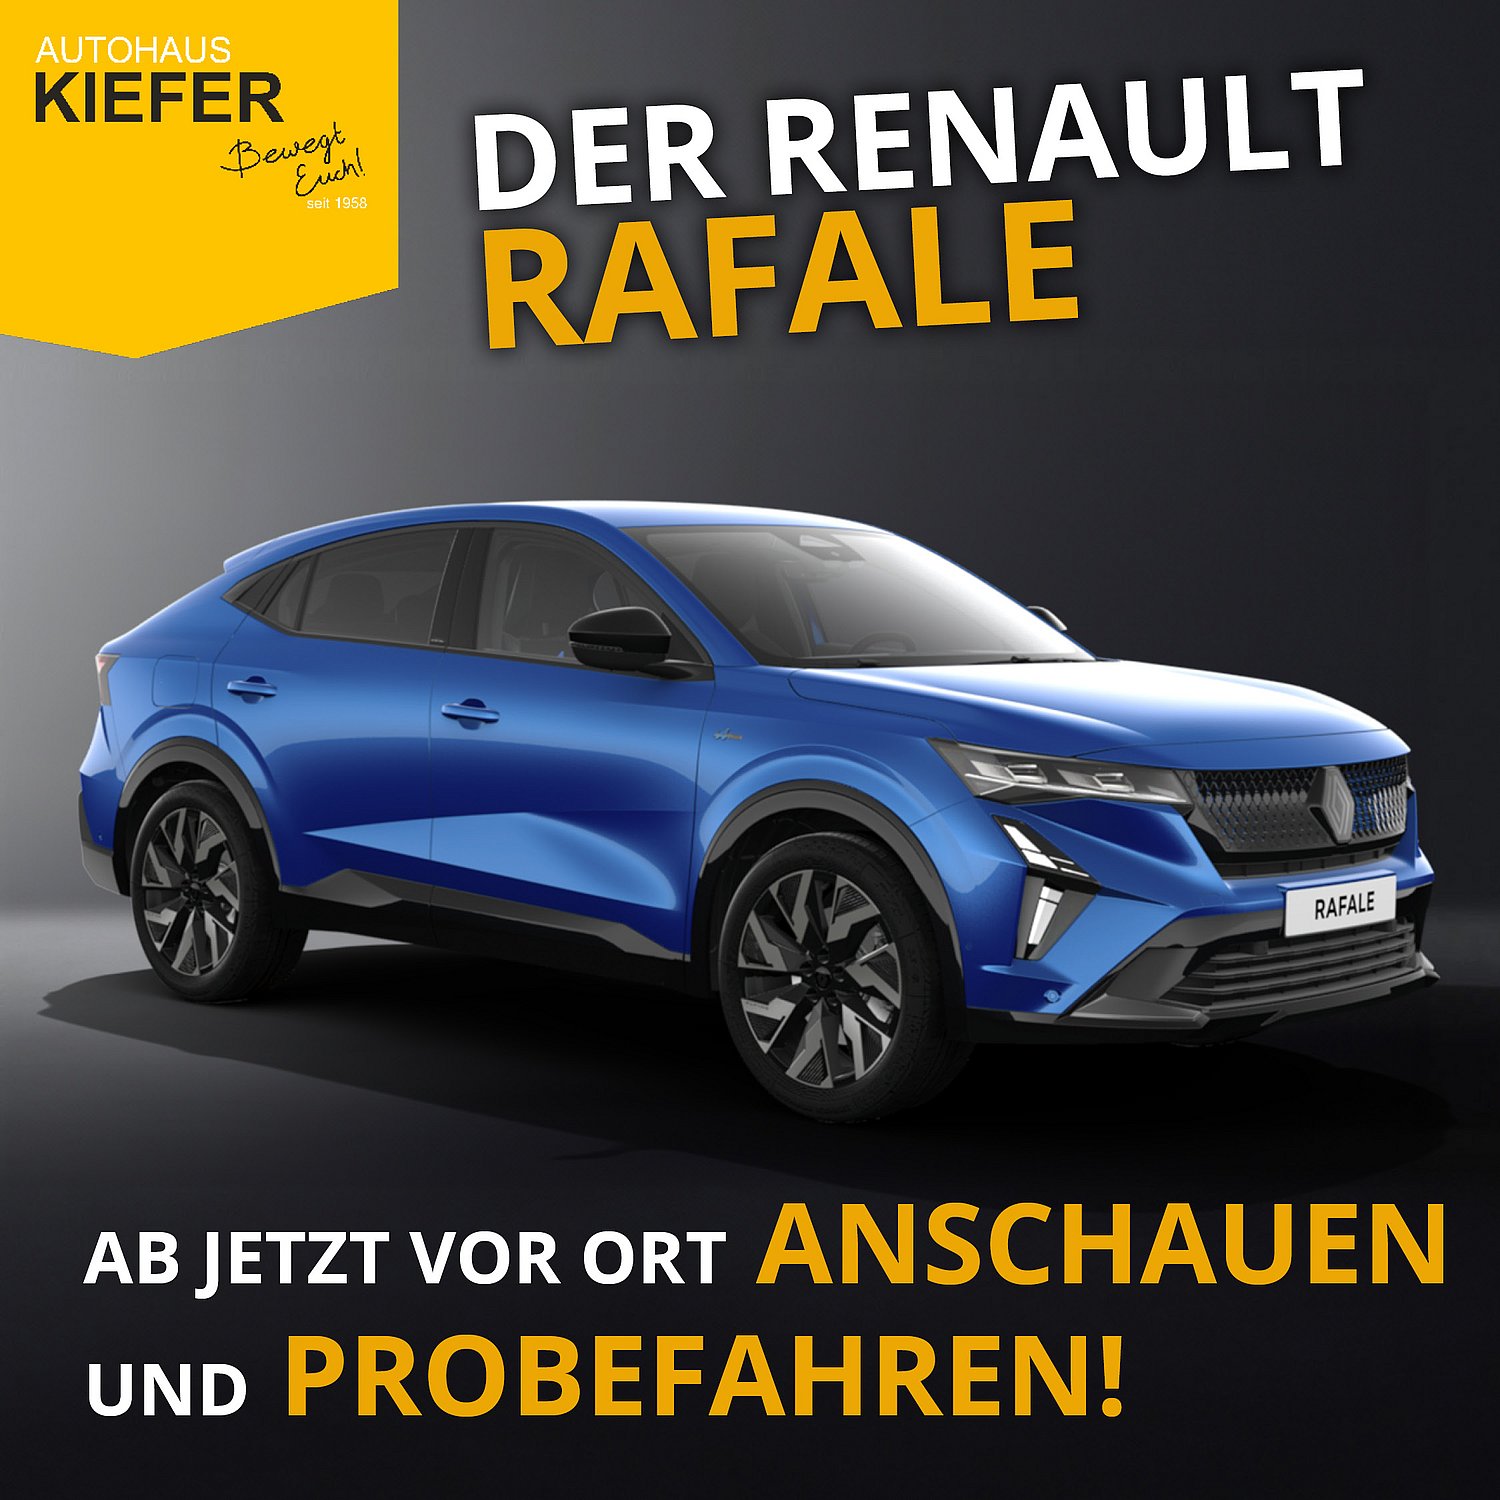 Autohaus Kiefer- Renault Rafale E